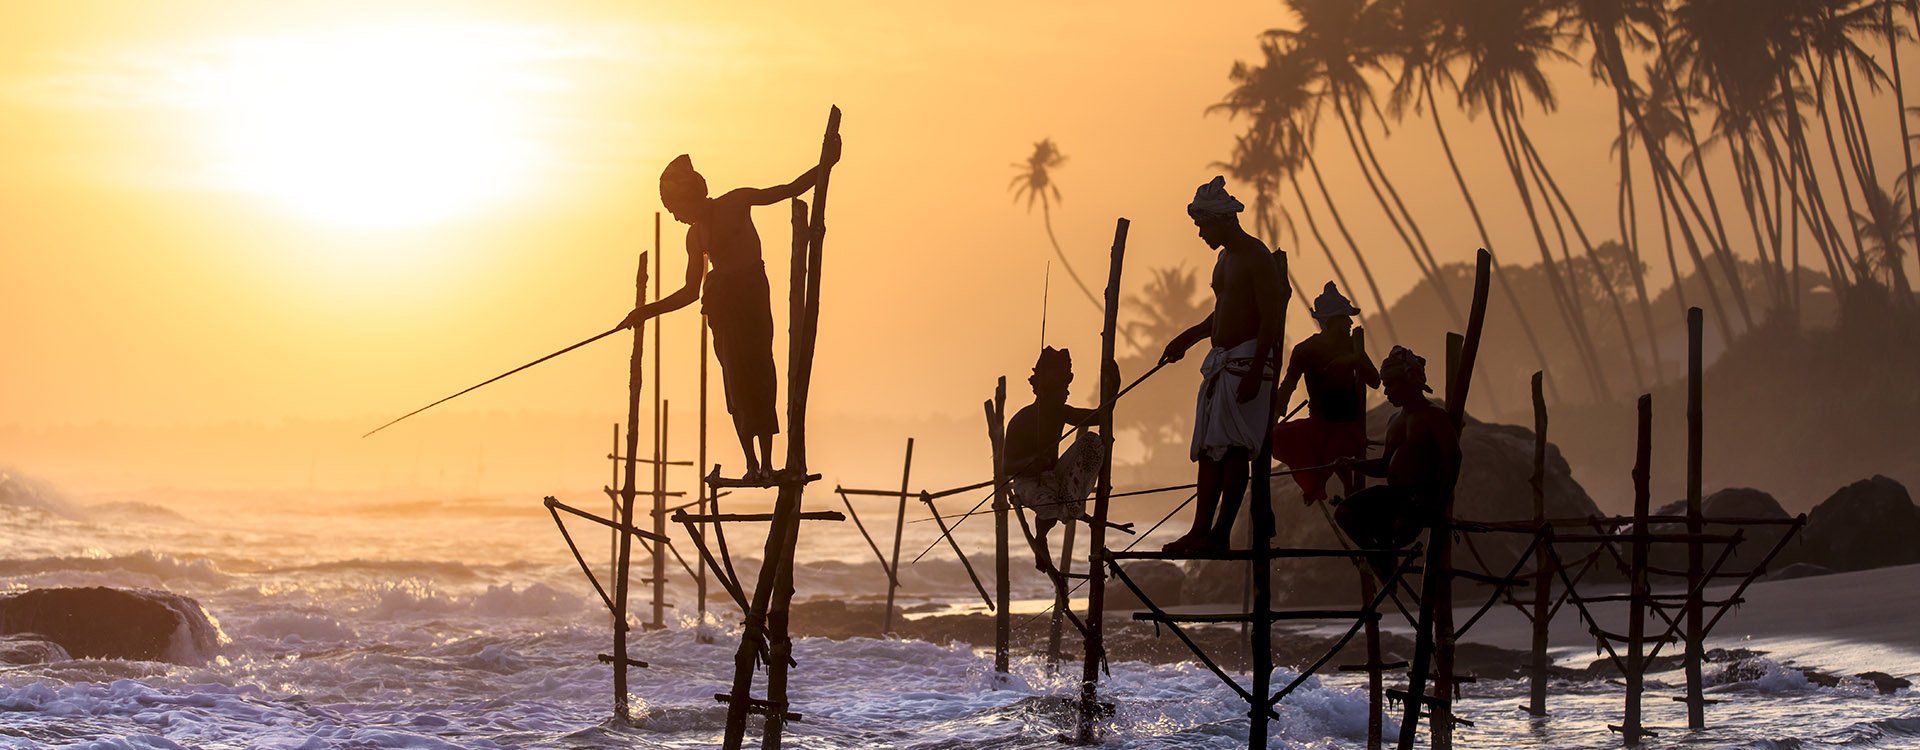 Sri Lanka Stlit-Fisherman